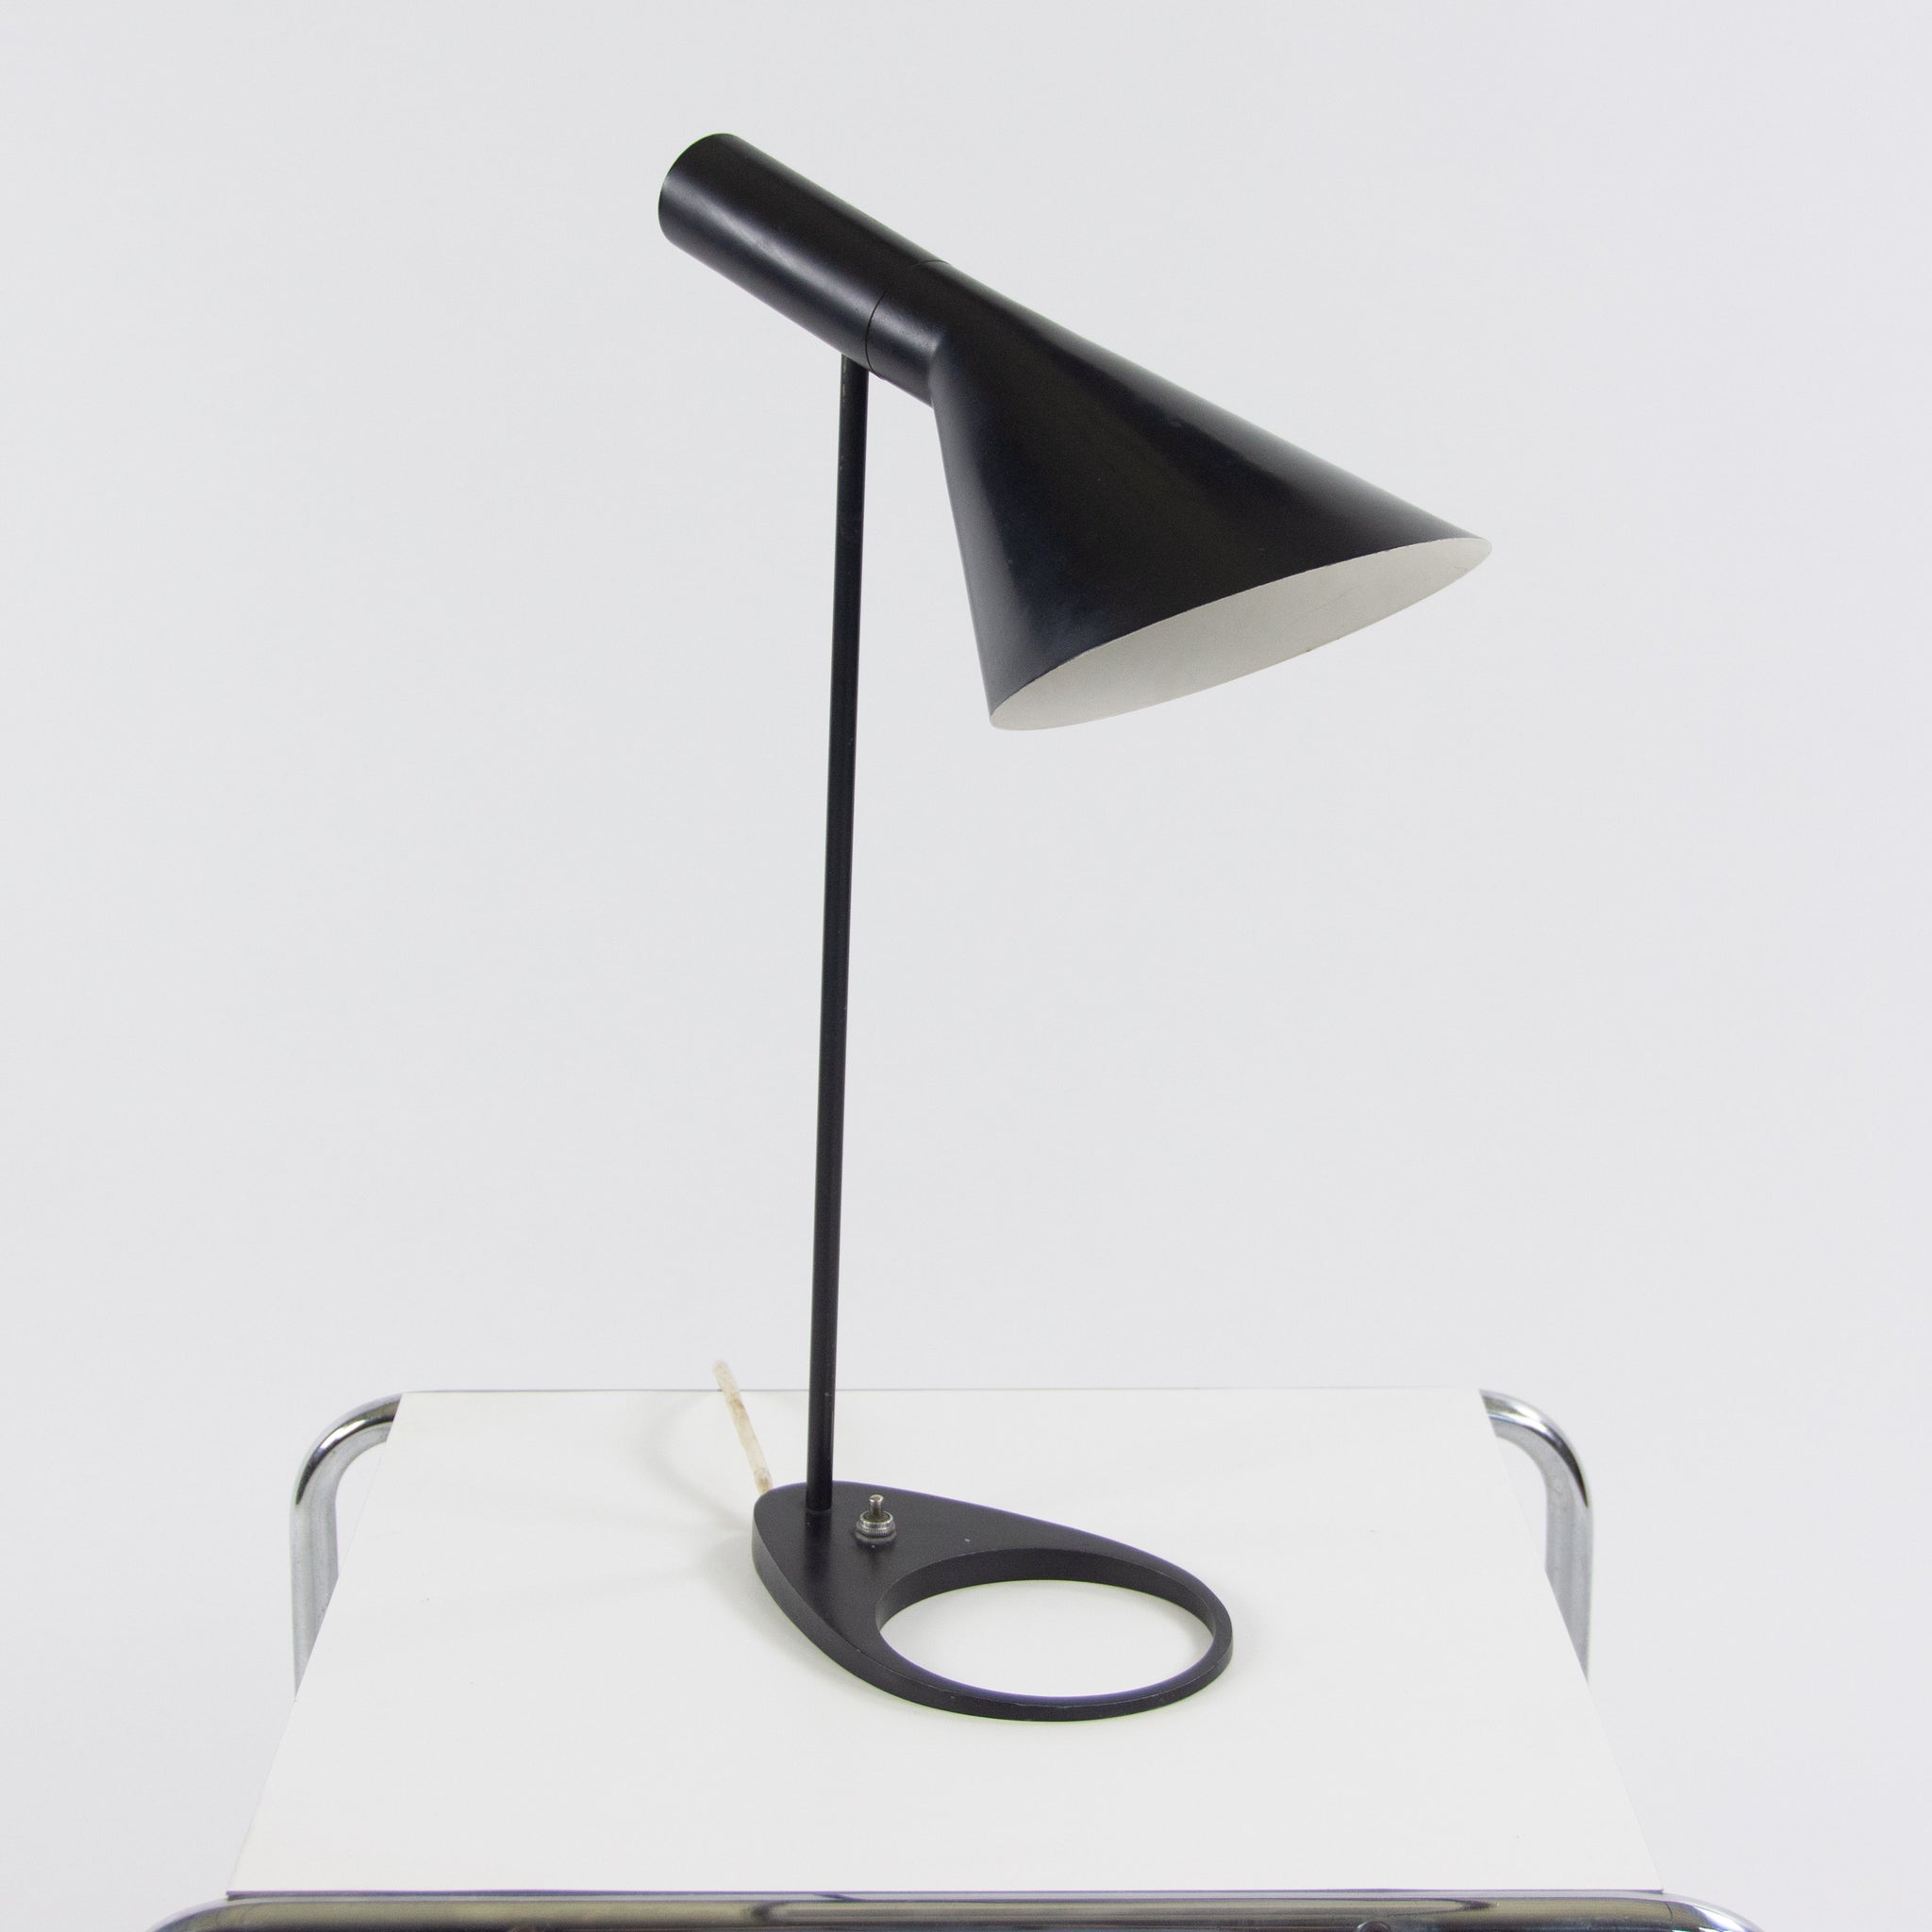 SOLD 1960's Vintage Louis Poulsen Arne Jacobsen AJ Desk Lamp Original